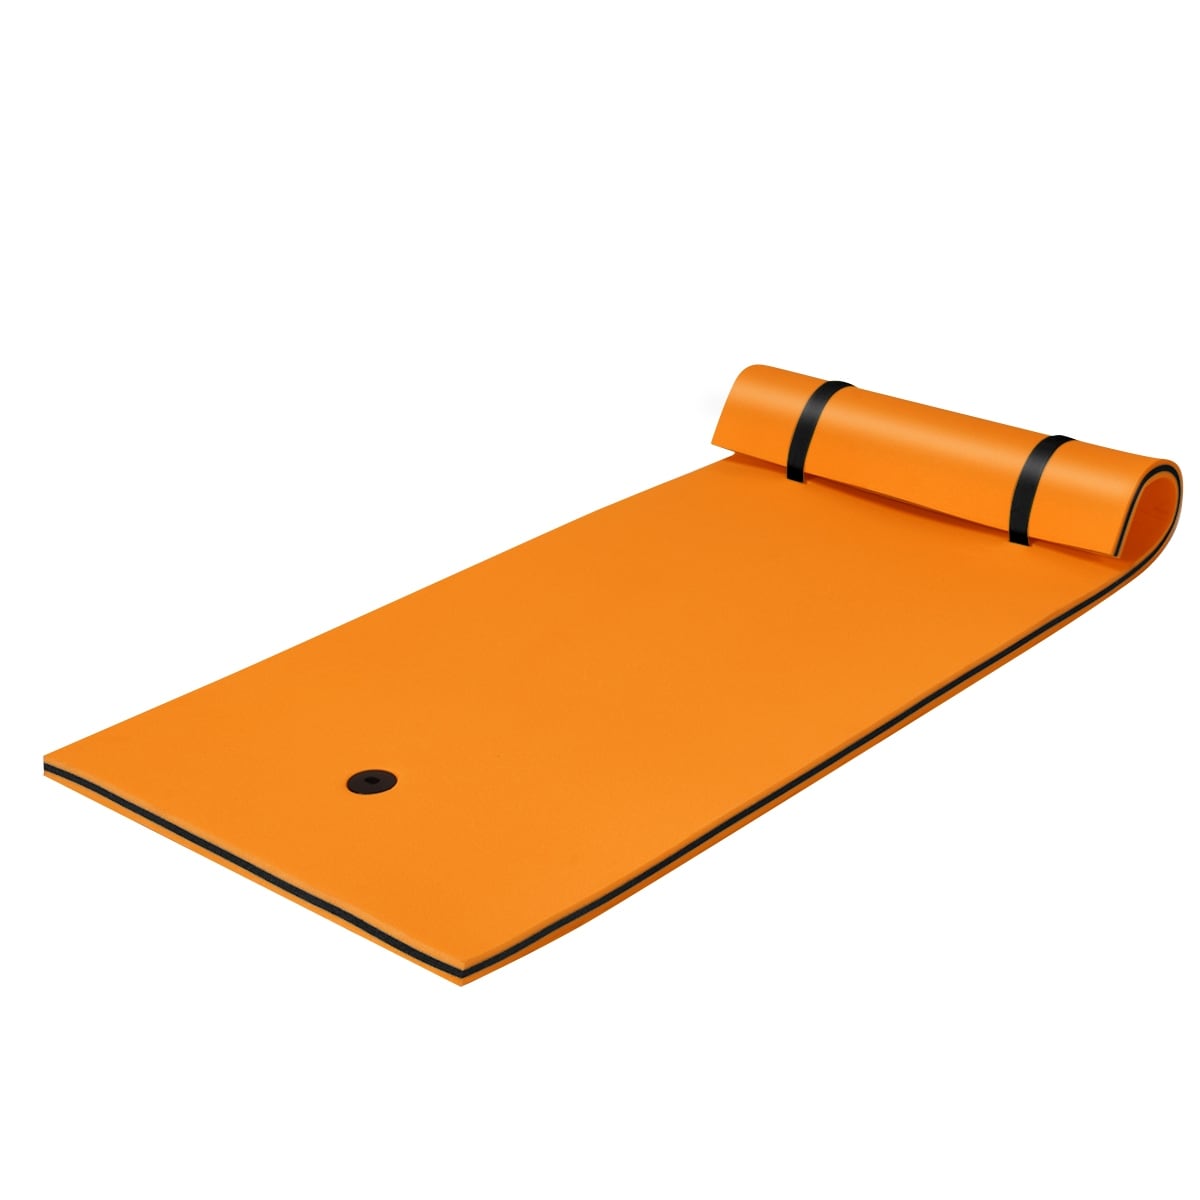 3-Layer Floating Water Pad 12' x 6' Floating Oasis Foam Mat - Orange